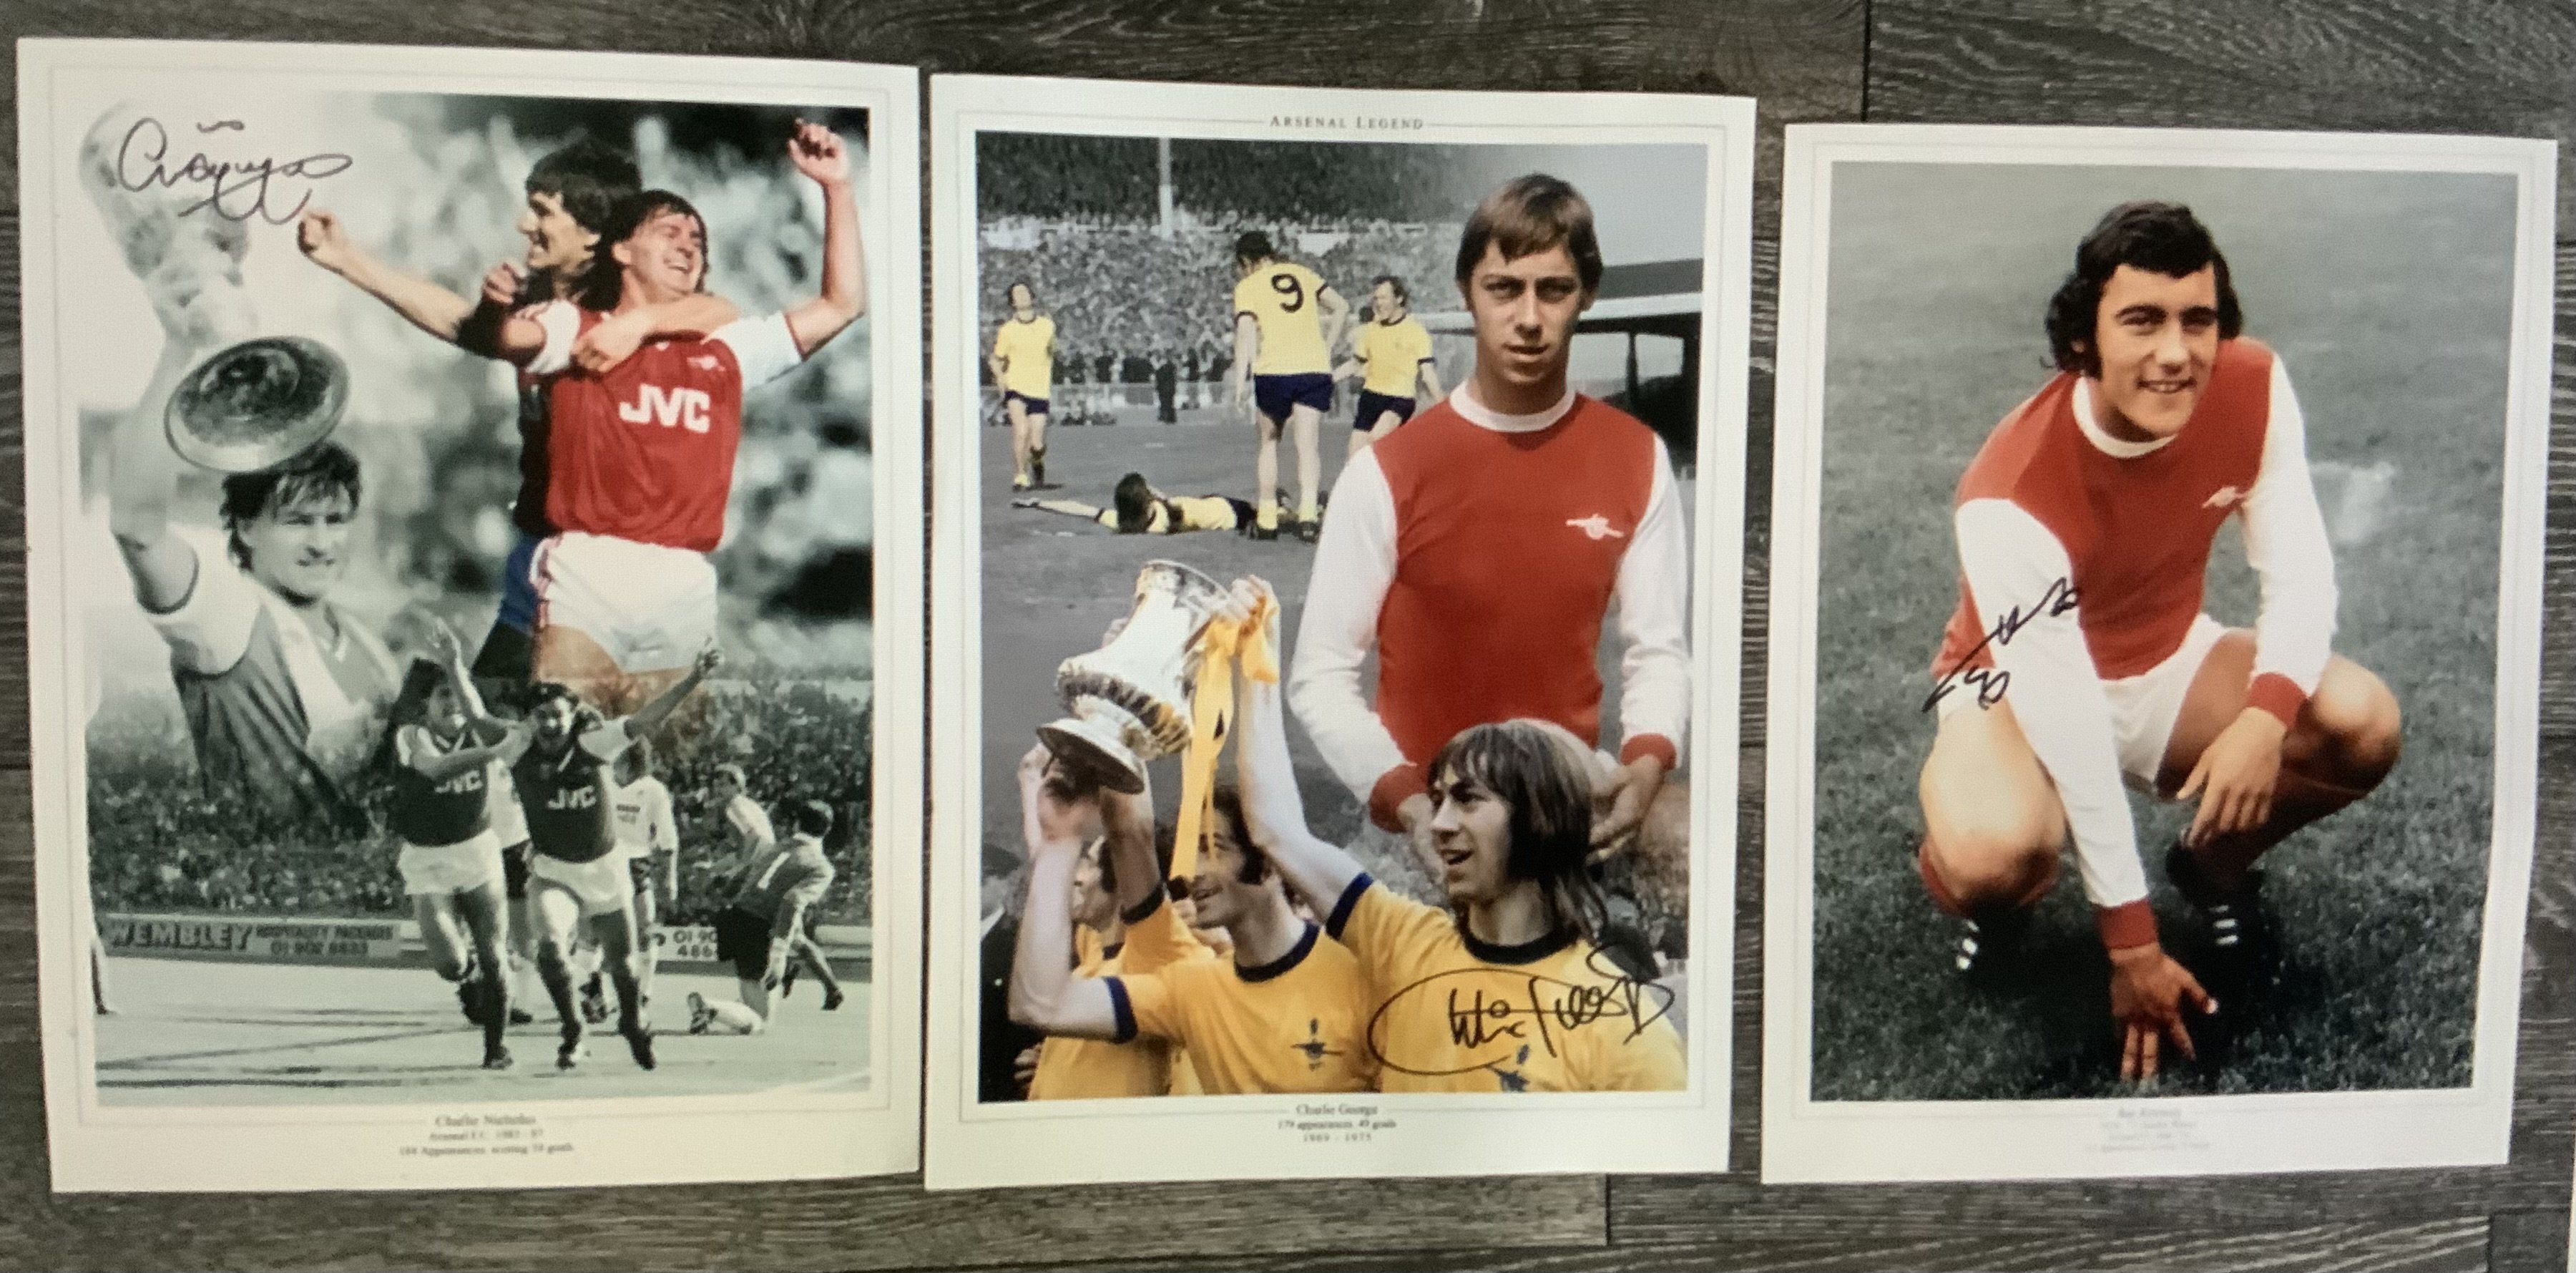 Arsenal Signed Football Photos: Folder containing